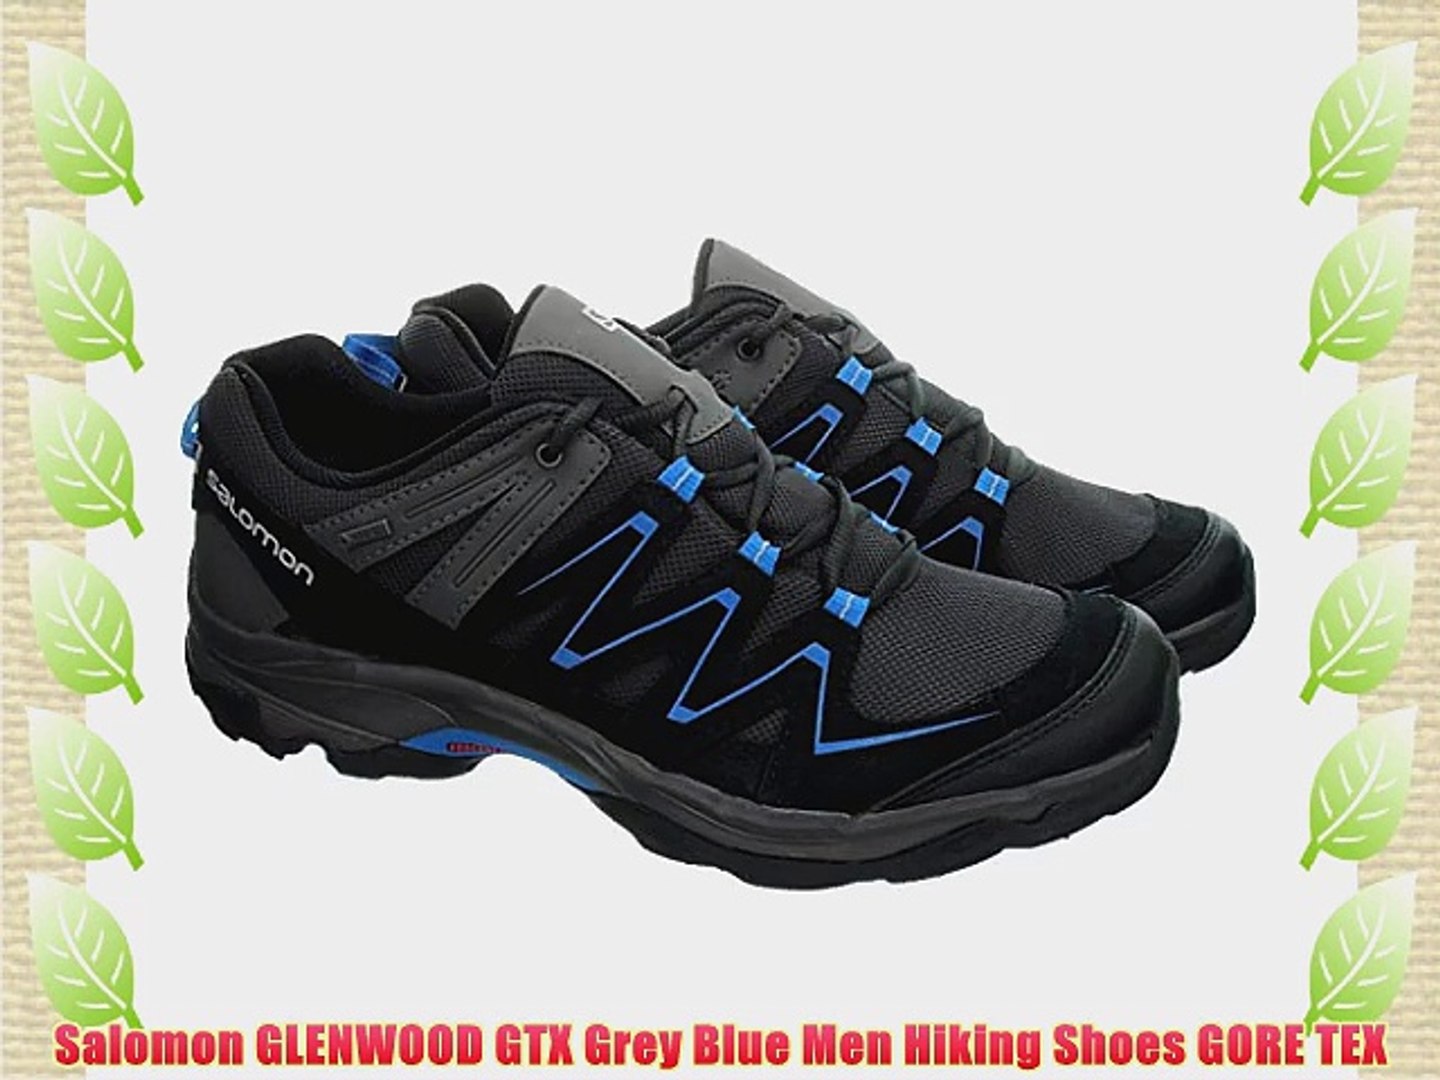 Salomon GLENWOOD GTX Grey Blue Men Hiking Shoes GORE TEX - video Dailymotion